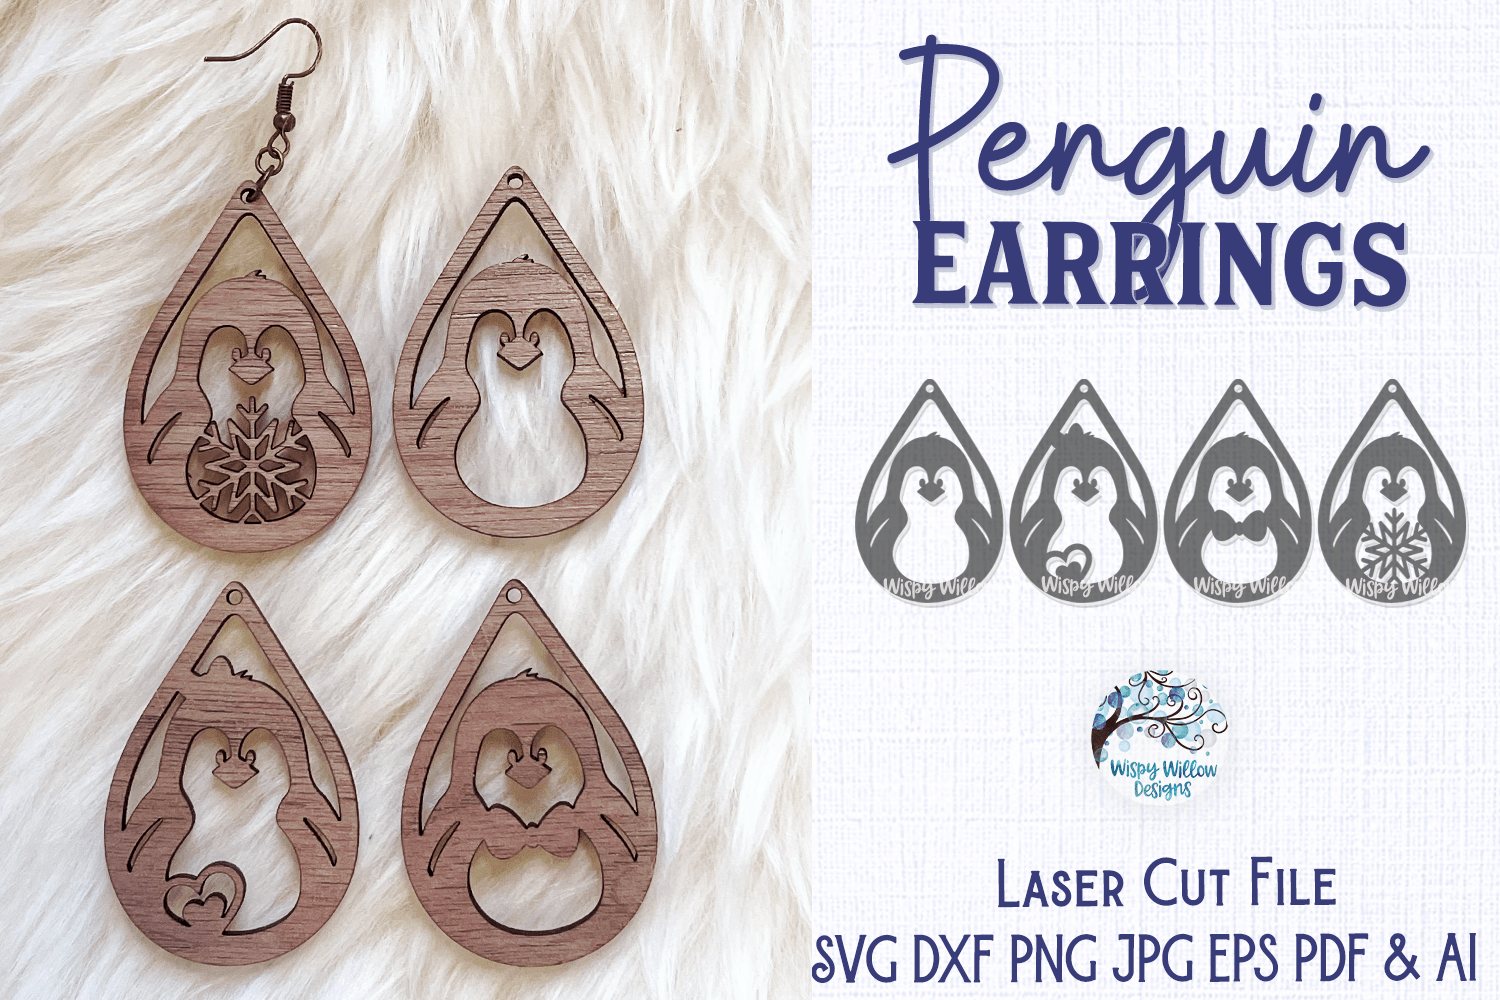 Penguin Earrings for Laser Wispy Willow Designs Company